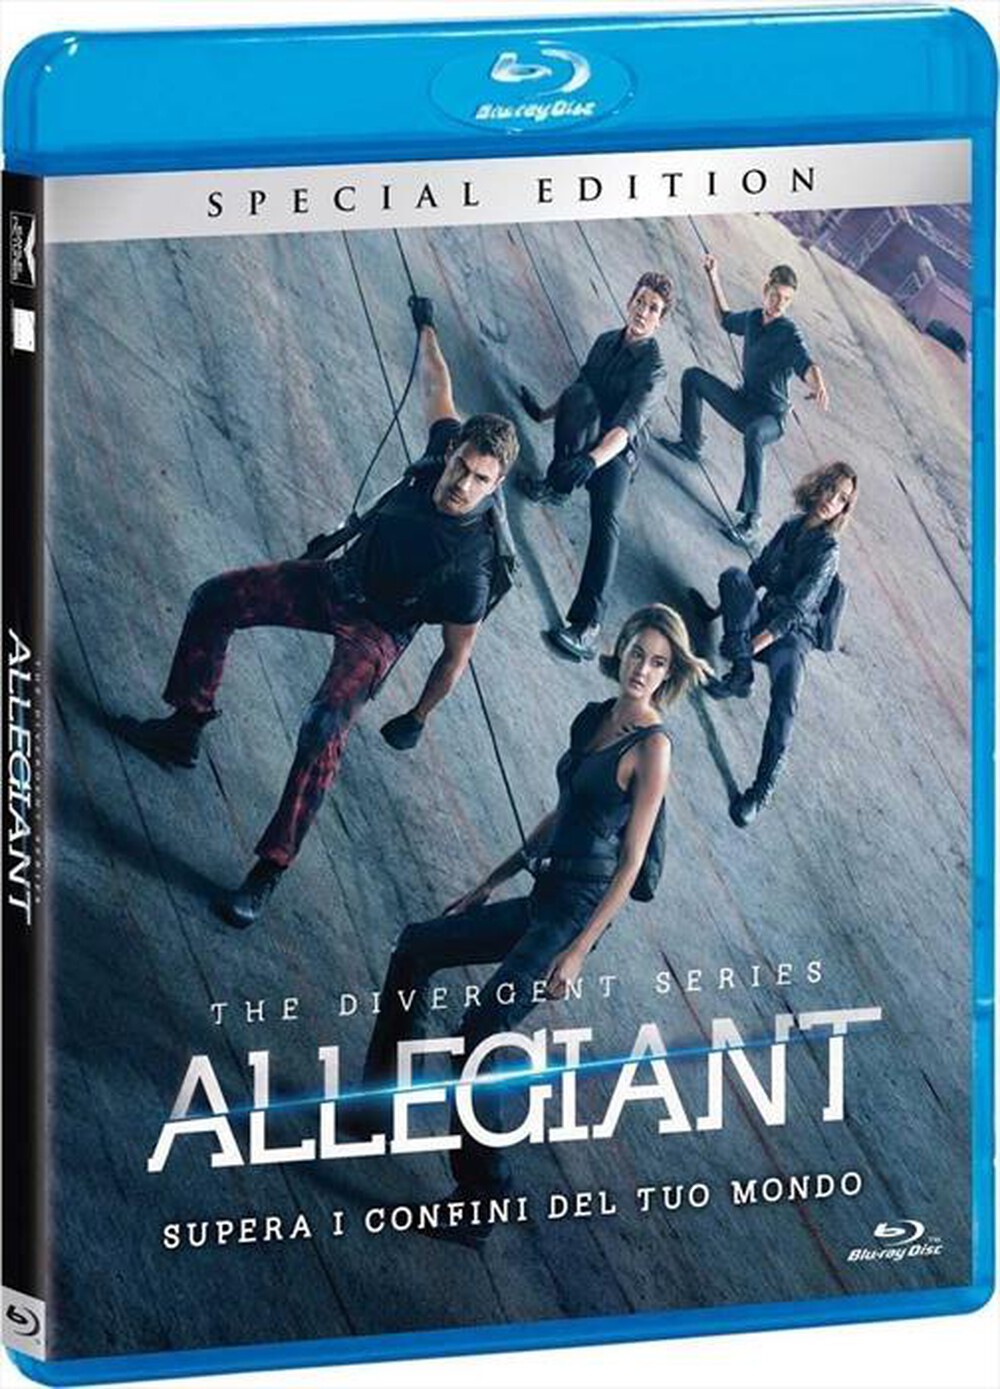 "EAGLE PICTURES - Allegiant - The Divergent Series (SE)"